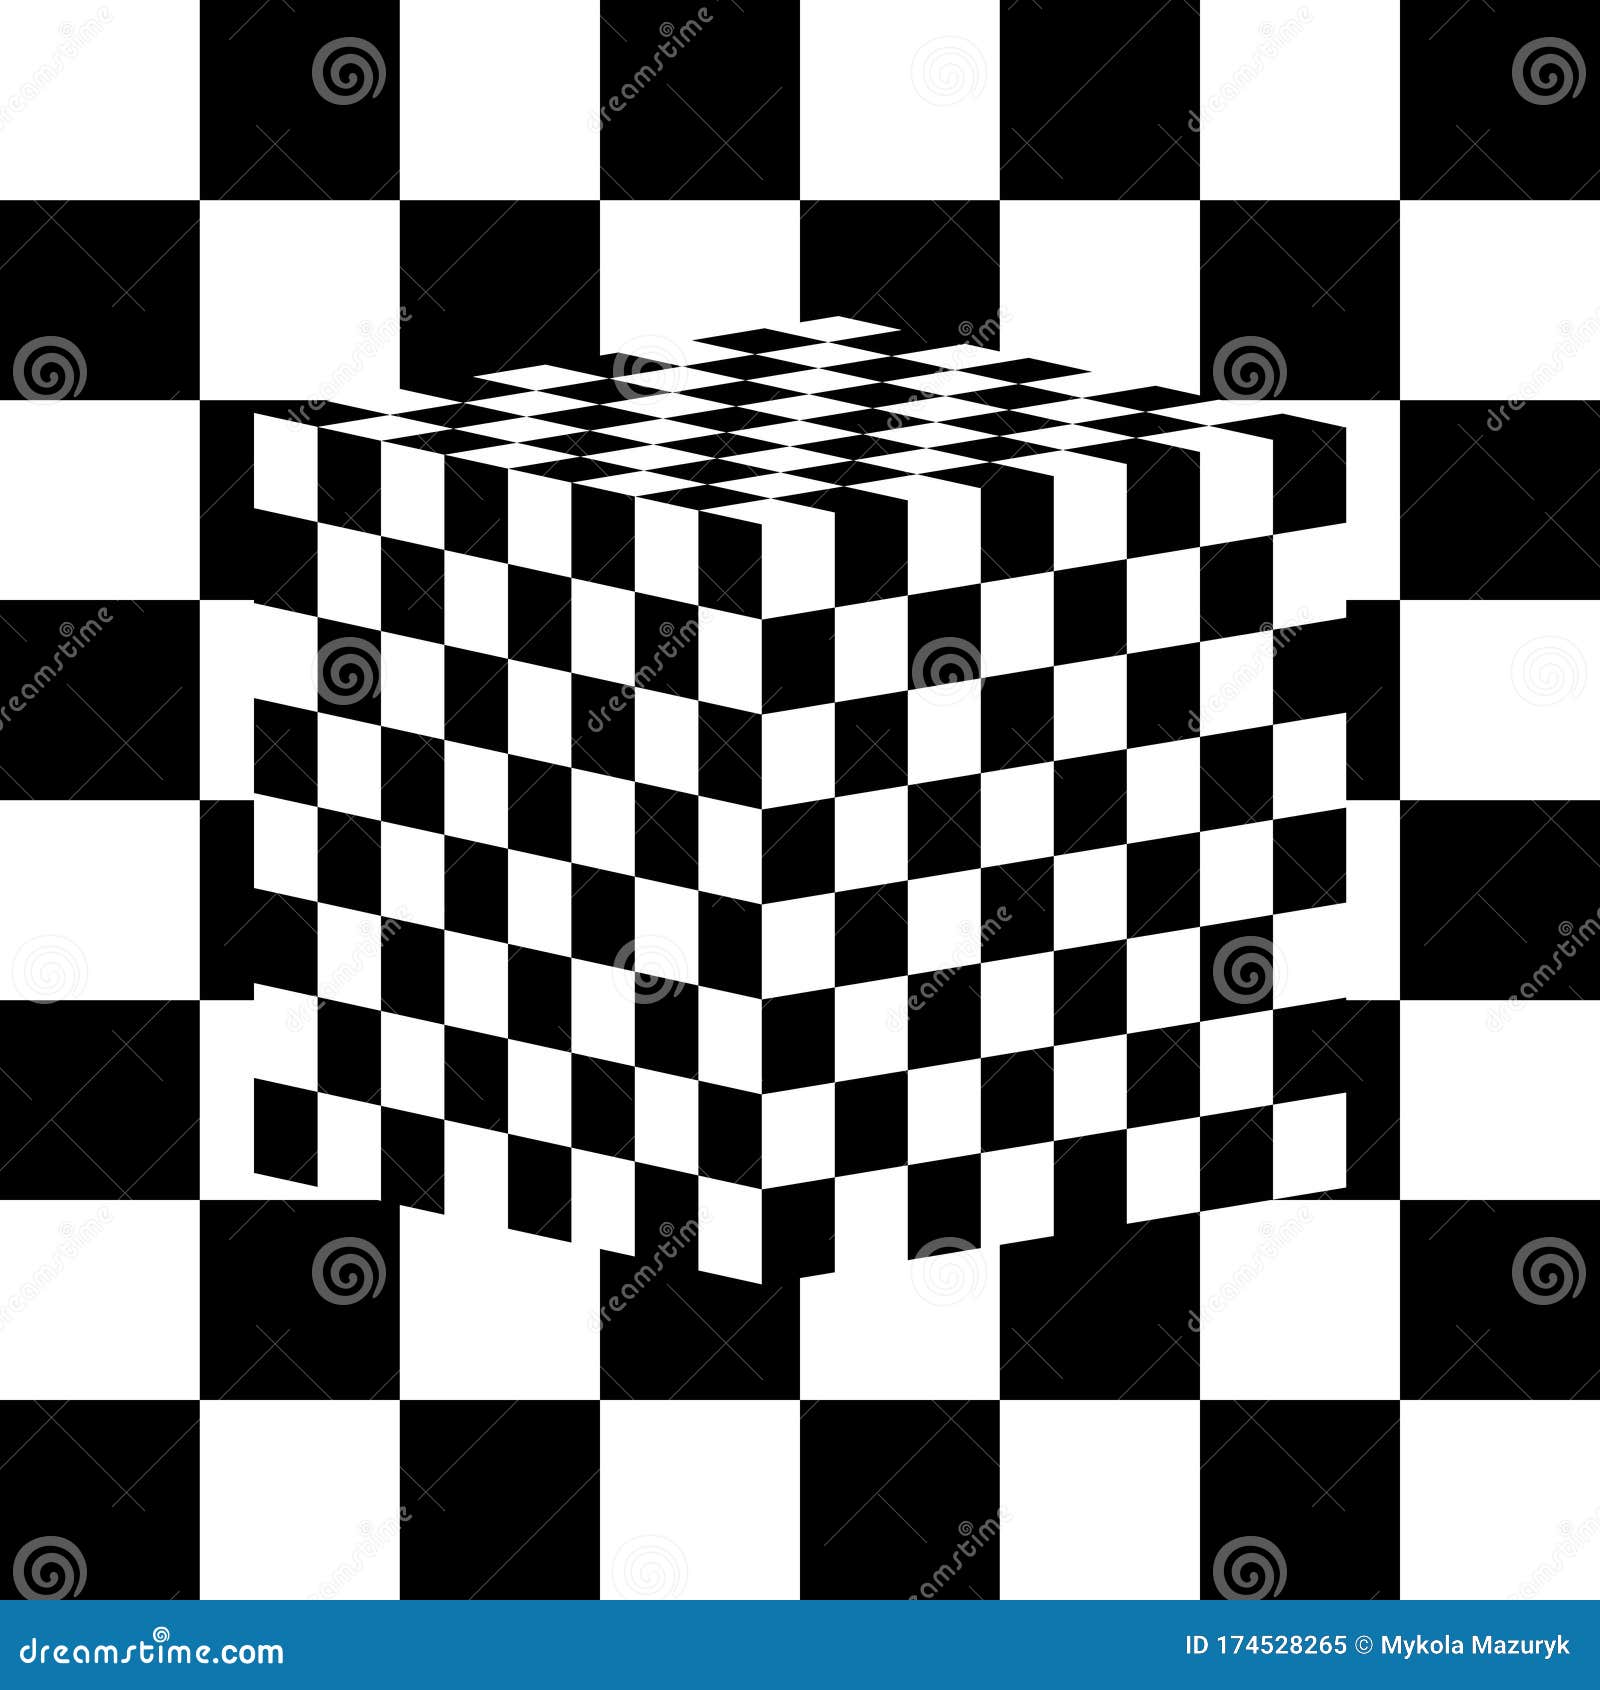 Desenho monocromático preto e branco, jogo de tabuleiro, ângulo